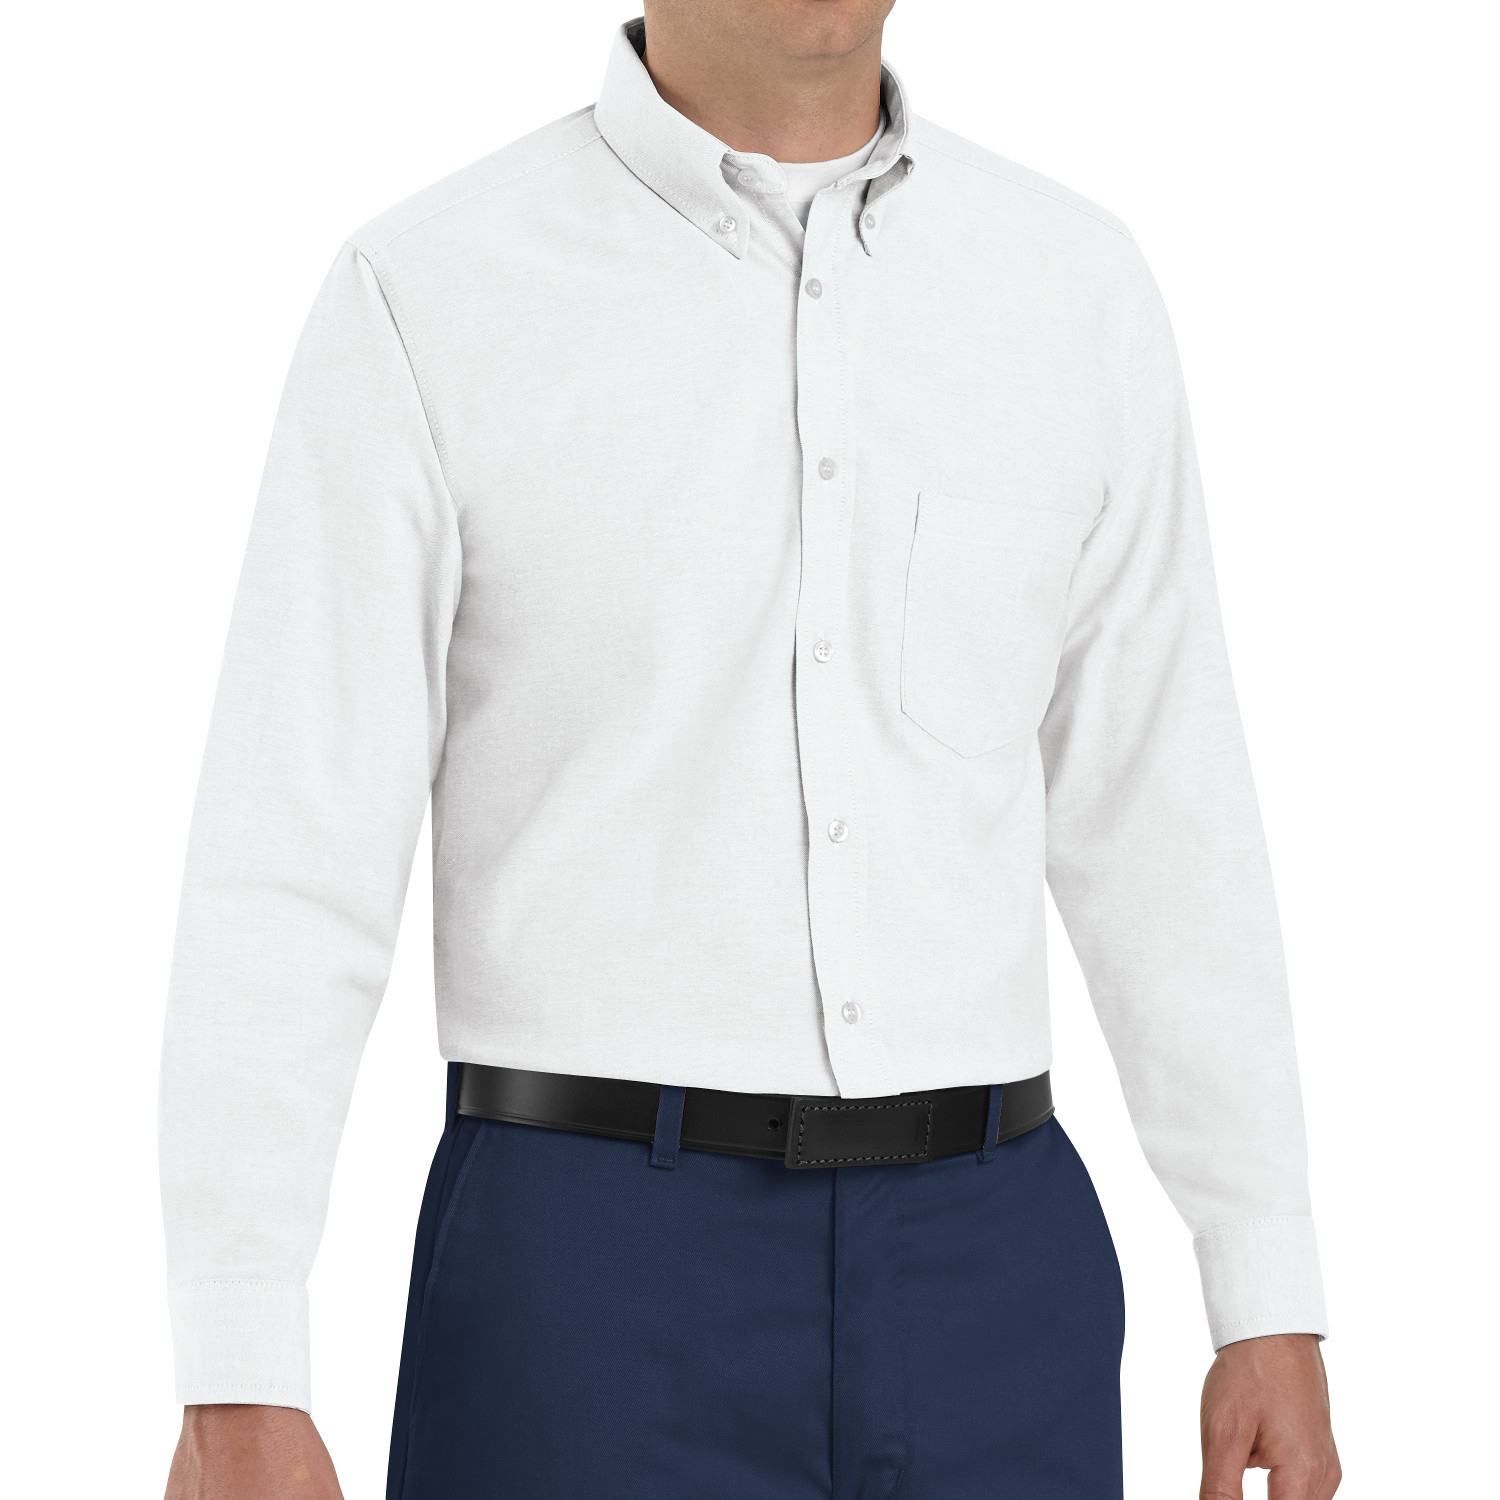 Men's Executive Oxford Dress Shirt SR70WH